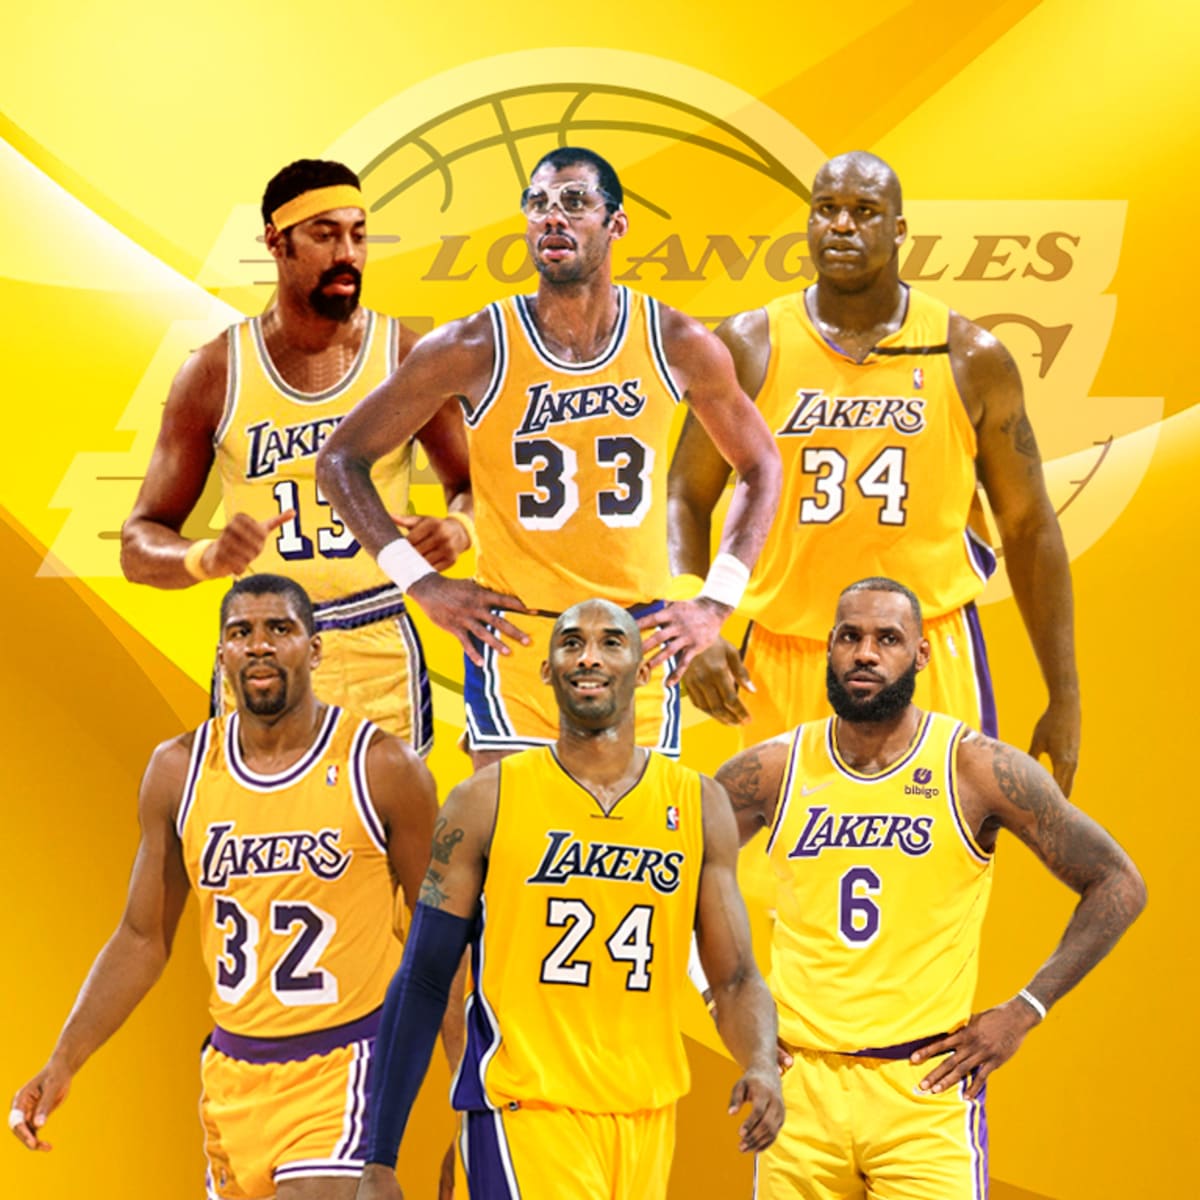 NBA Memes - The Suns had a bigger mickey mouse run than the Lakers